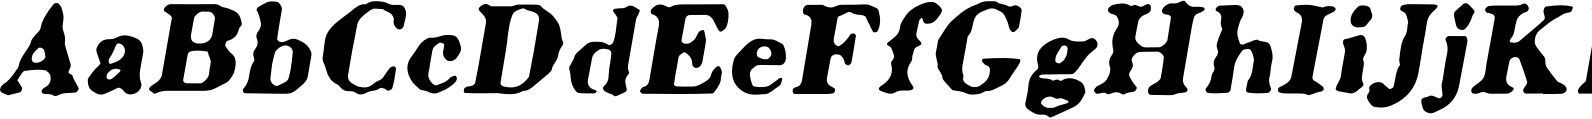 CC Letterhack Serif Bold Italic